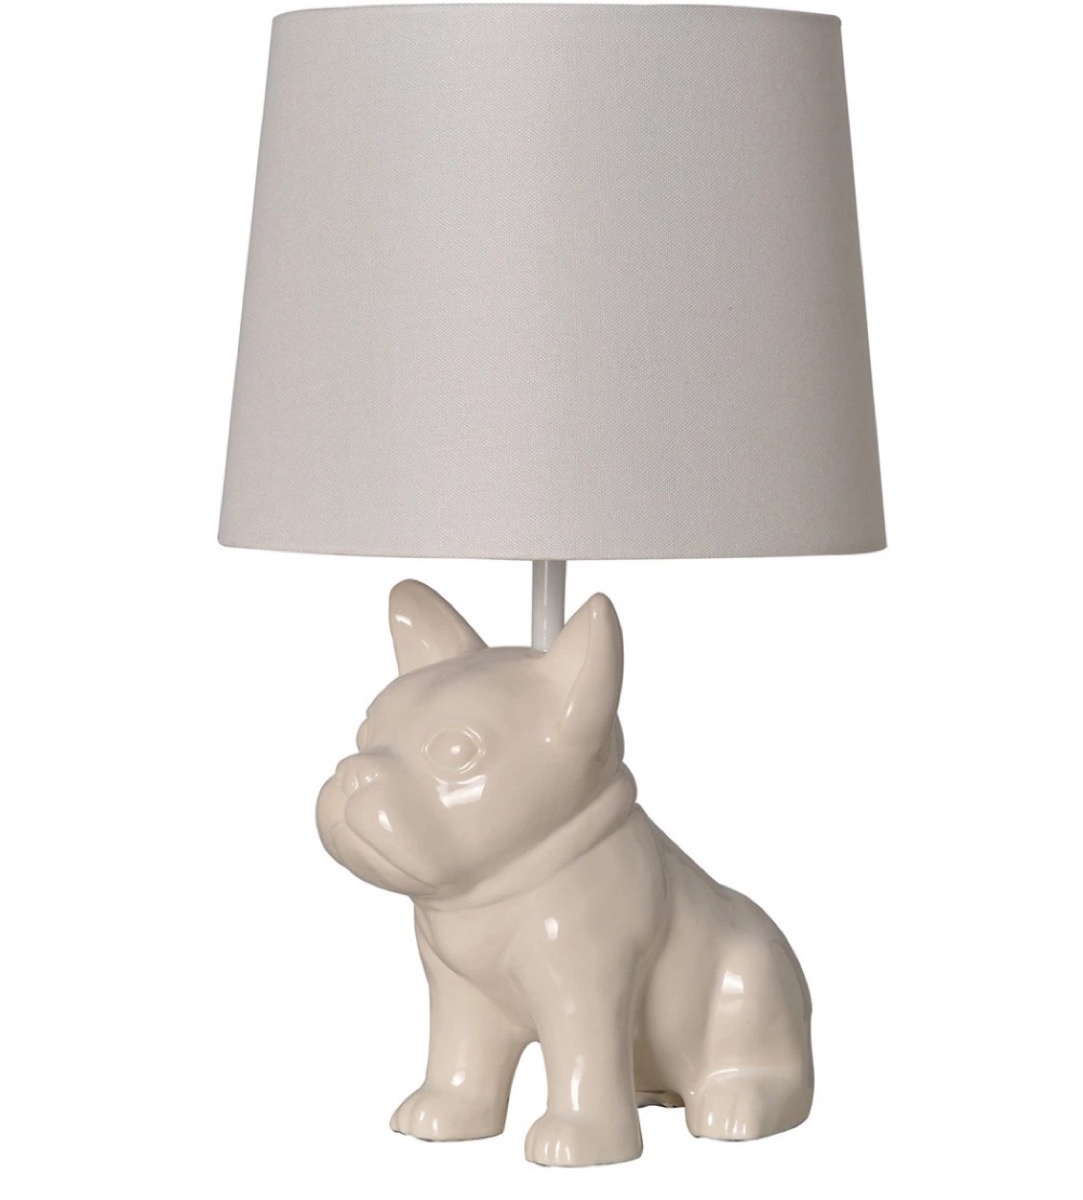 Cream Bulldog Table Lamp Target Shopping